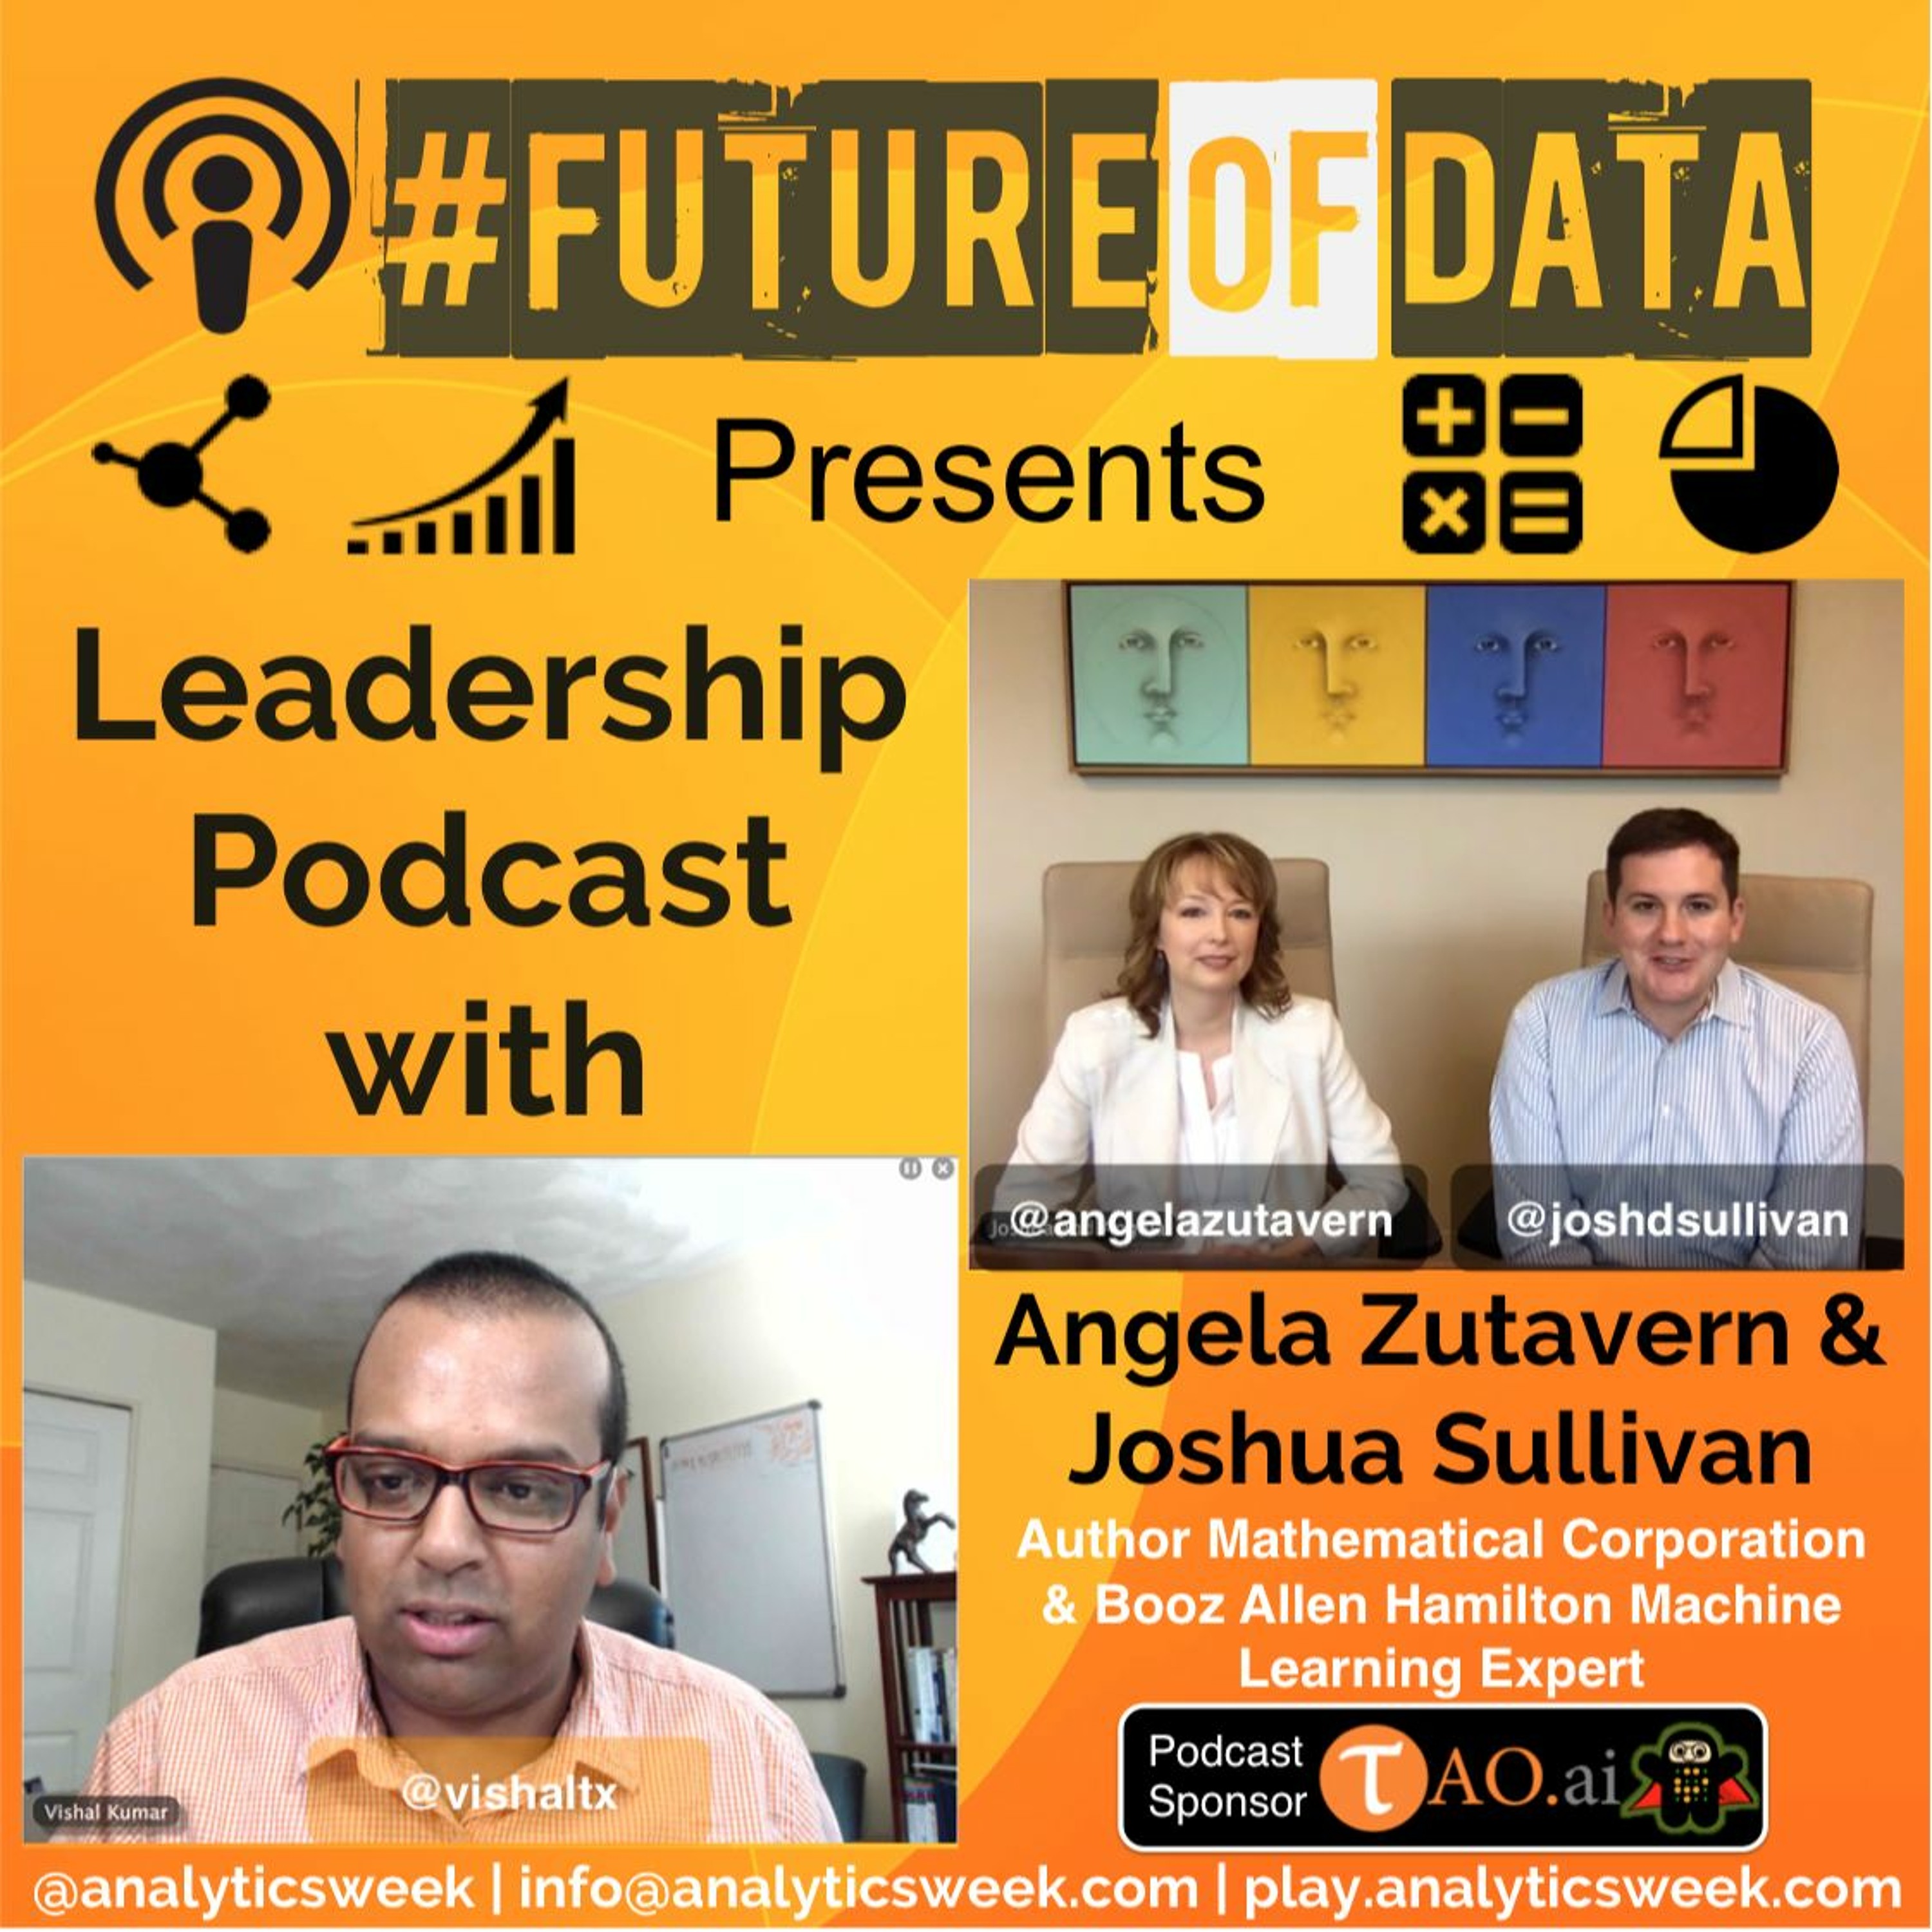 @AngelaZutavern & @JoshDSullivan @BoozAllen discussed Mathematical Corporation #FutureOfData